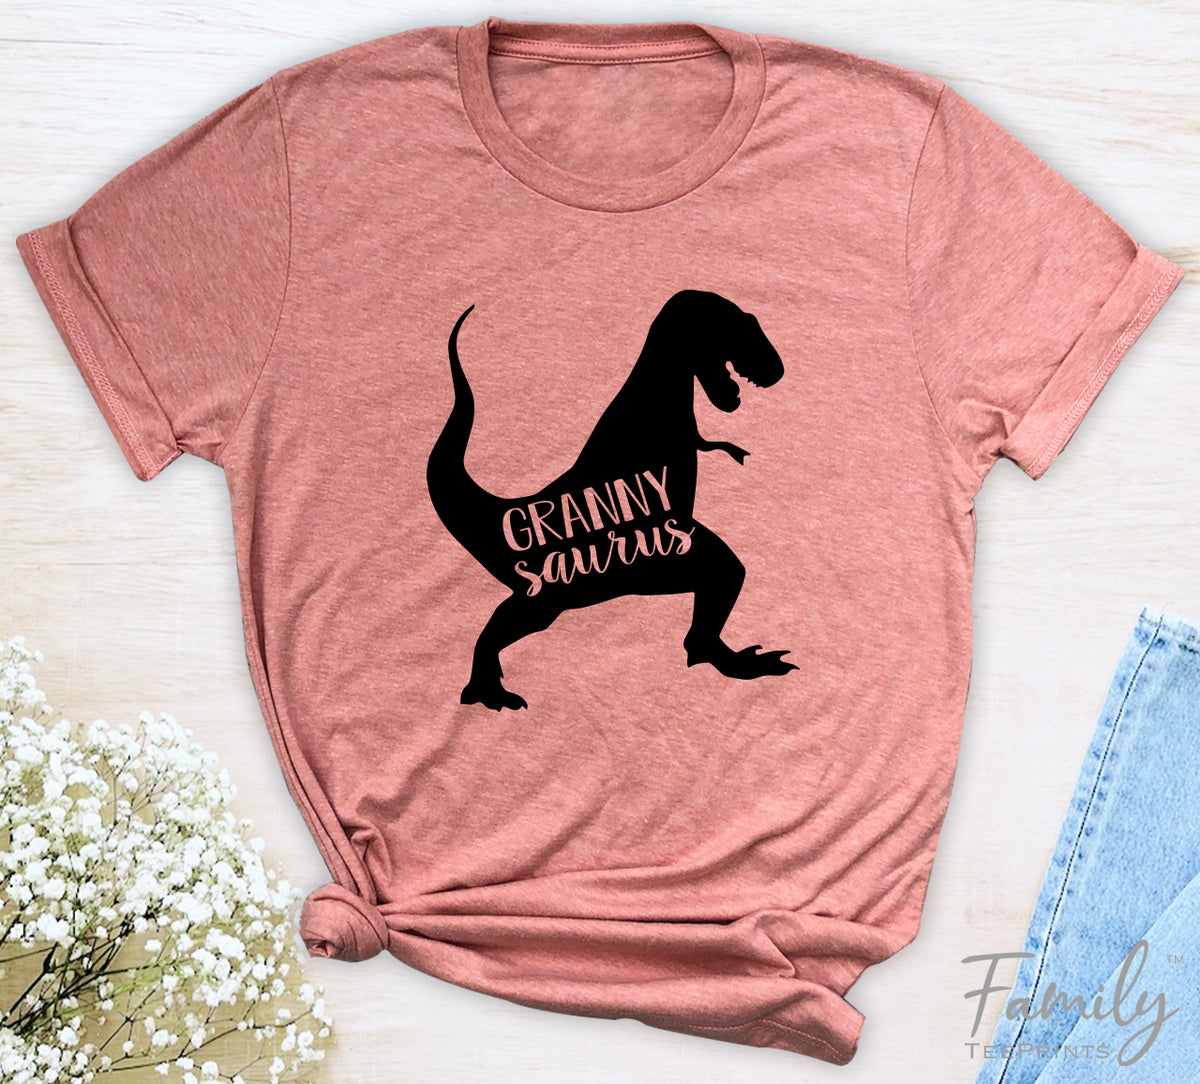 Grannysaurus - Unisex T-shirt - Granny Shirt - Gift For New Granny - familyteeprints